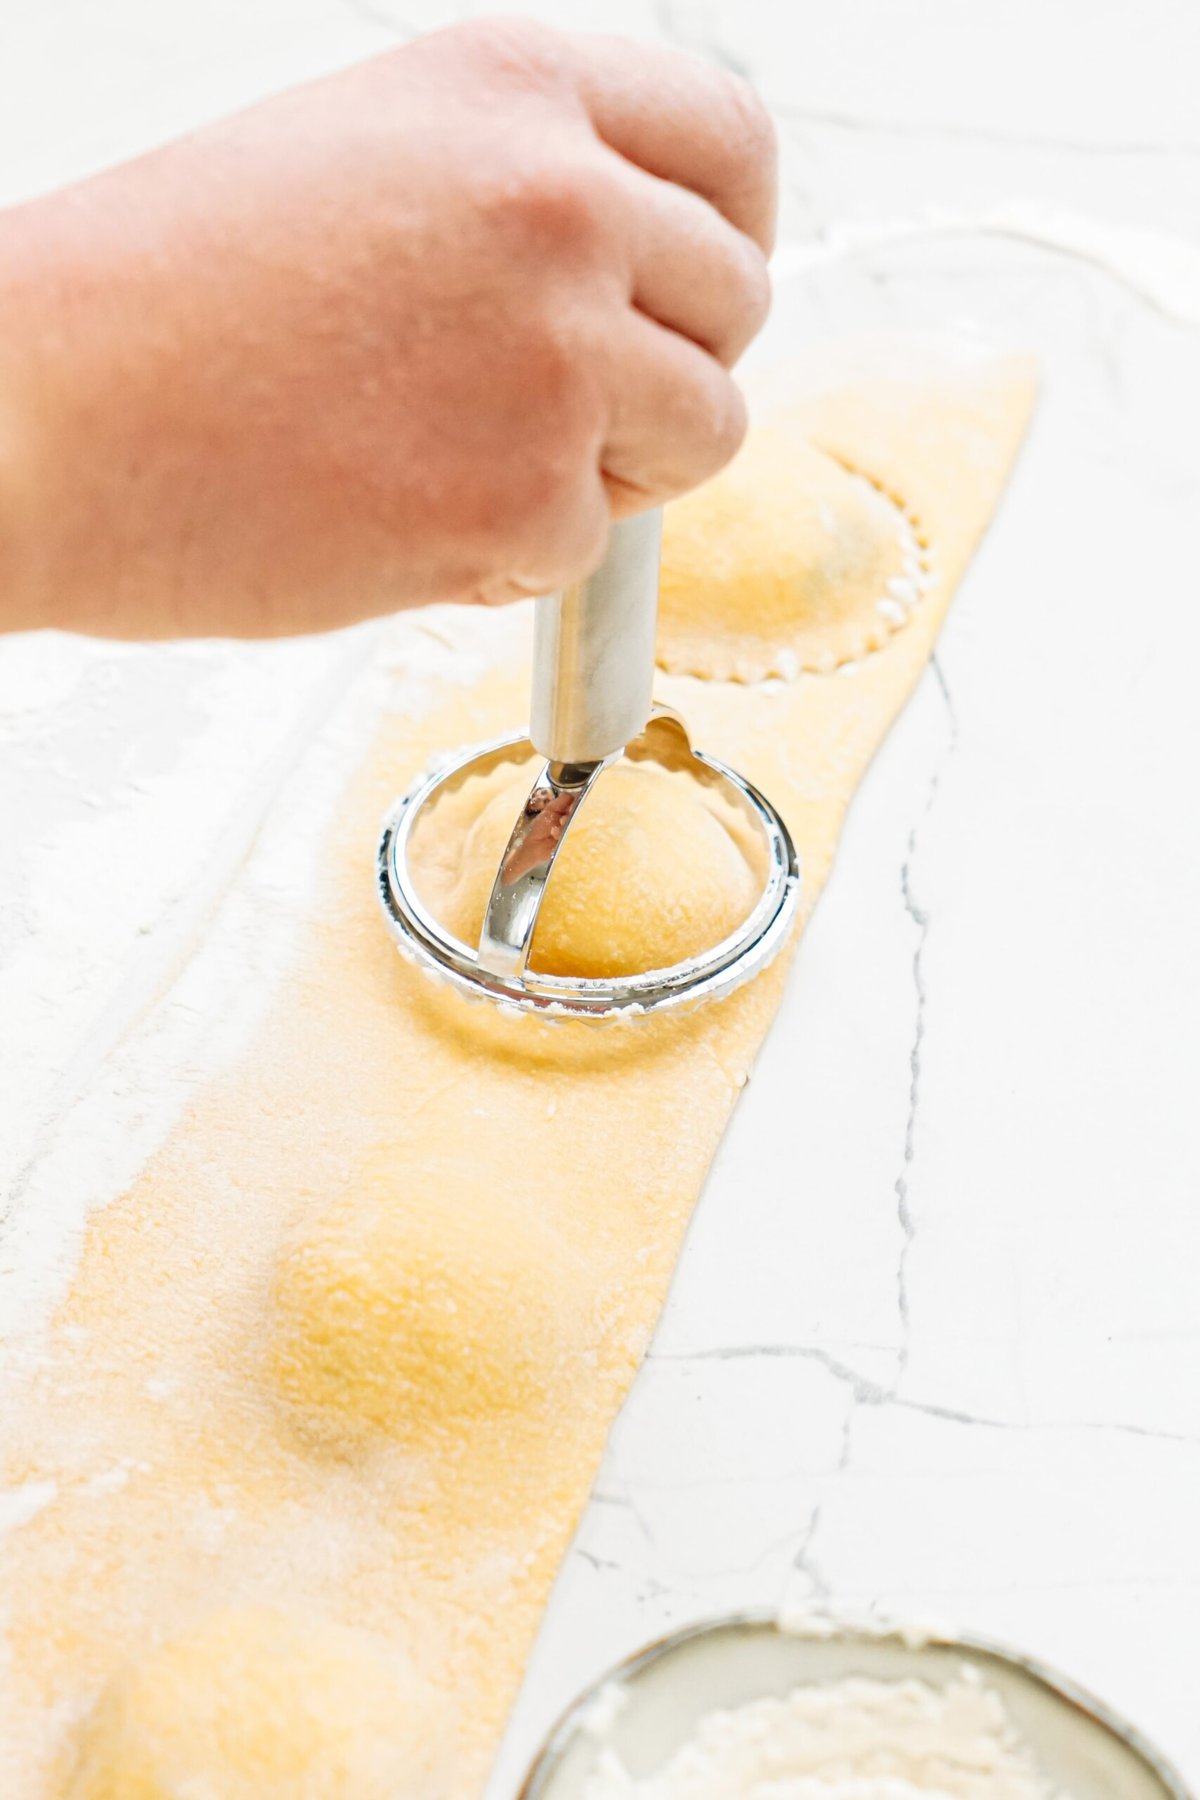 A person using a ravioli cutter to make ravioli.